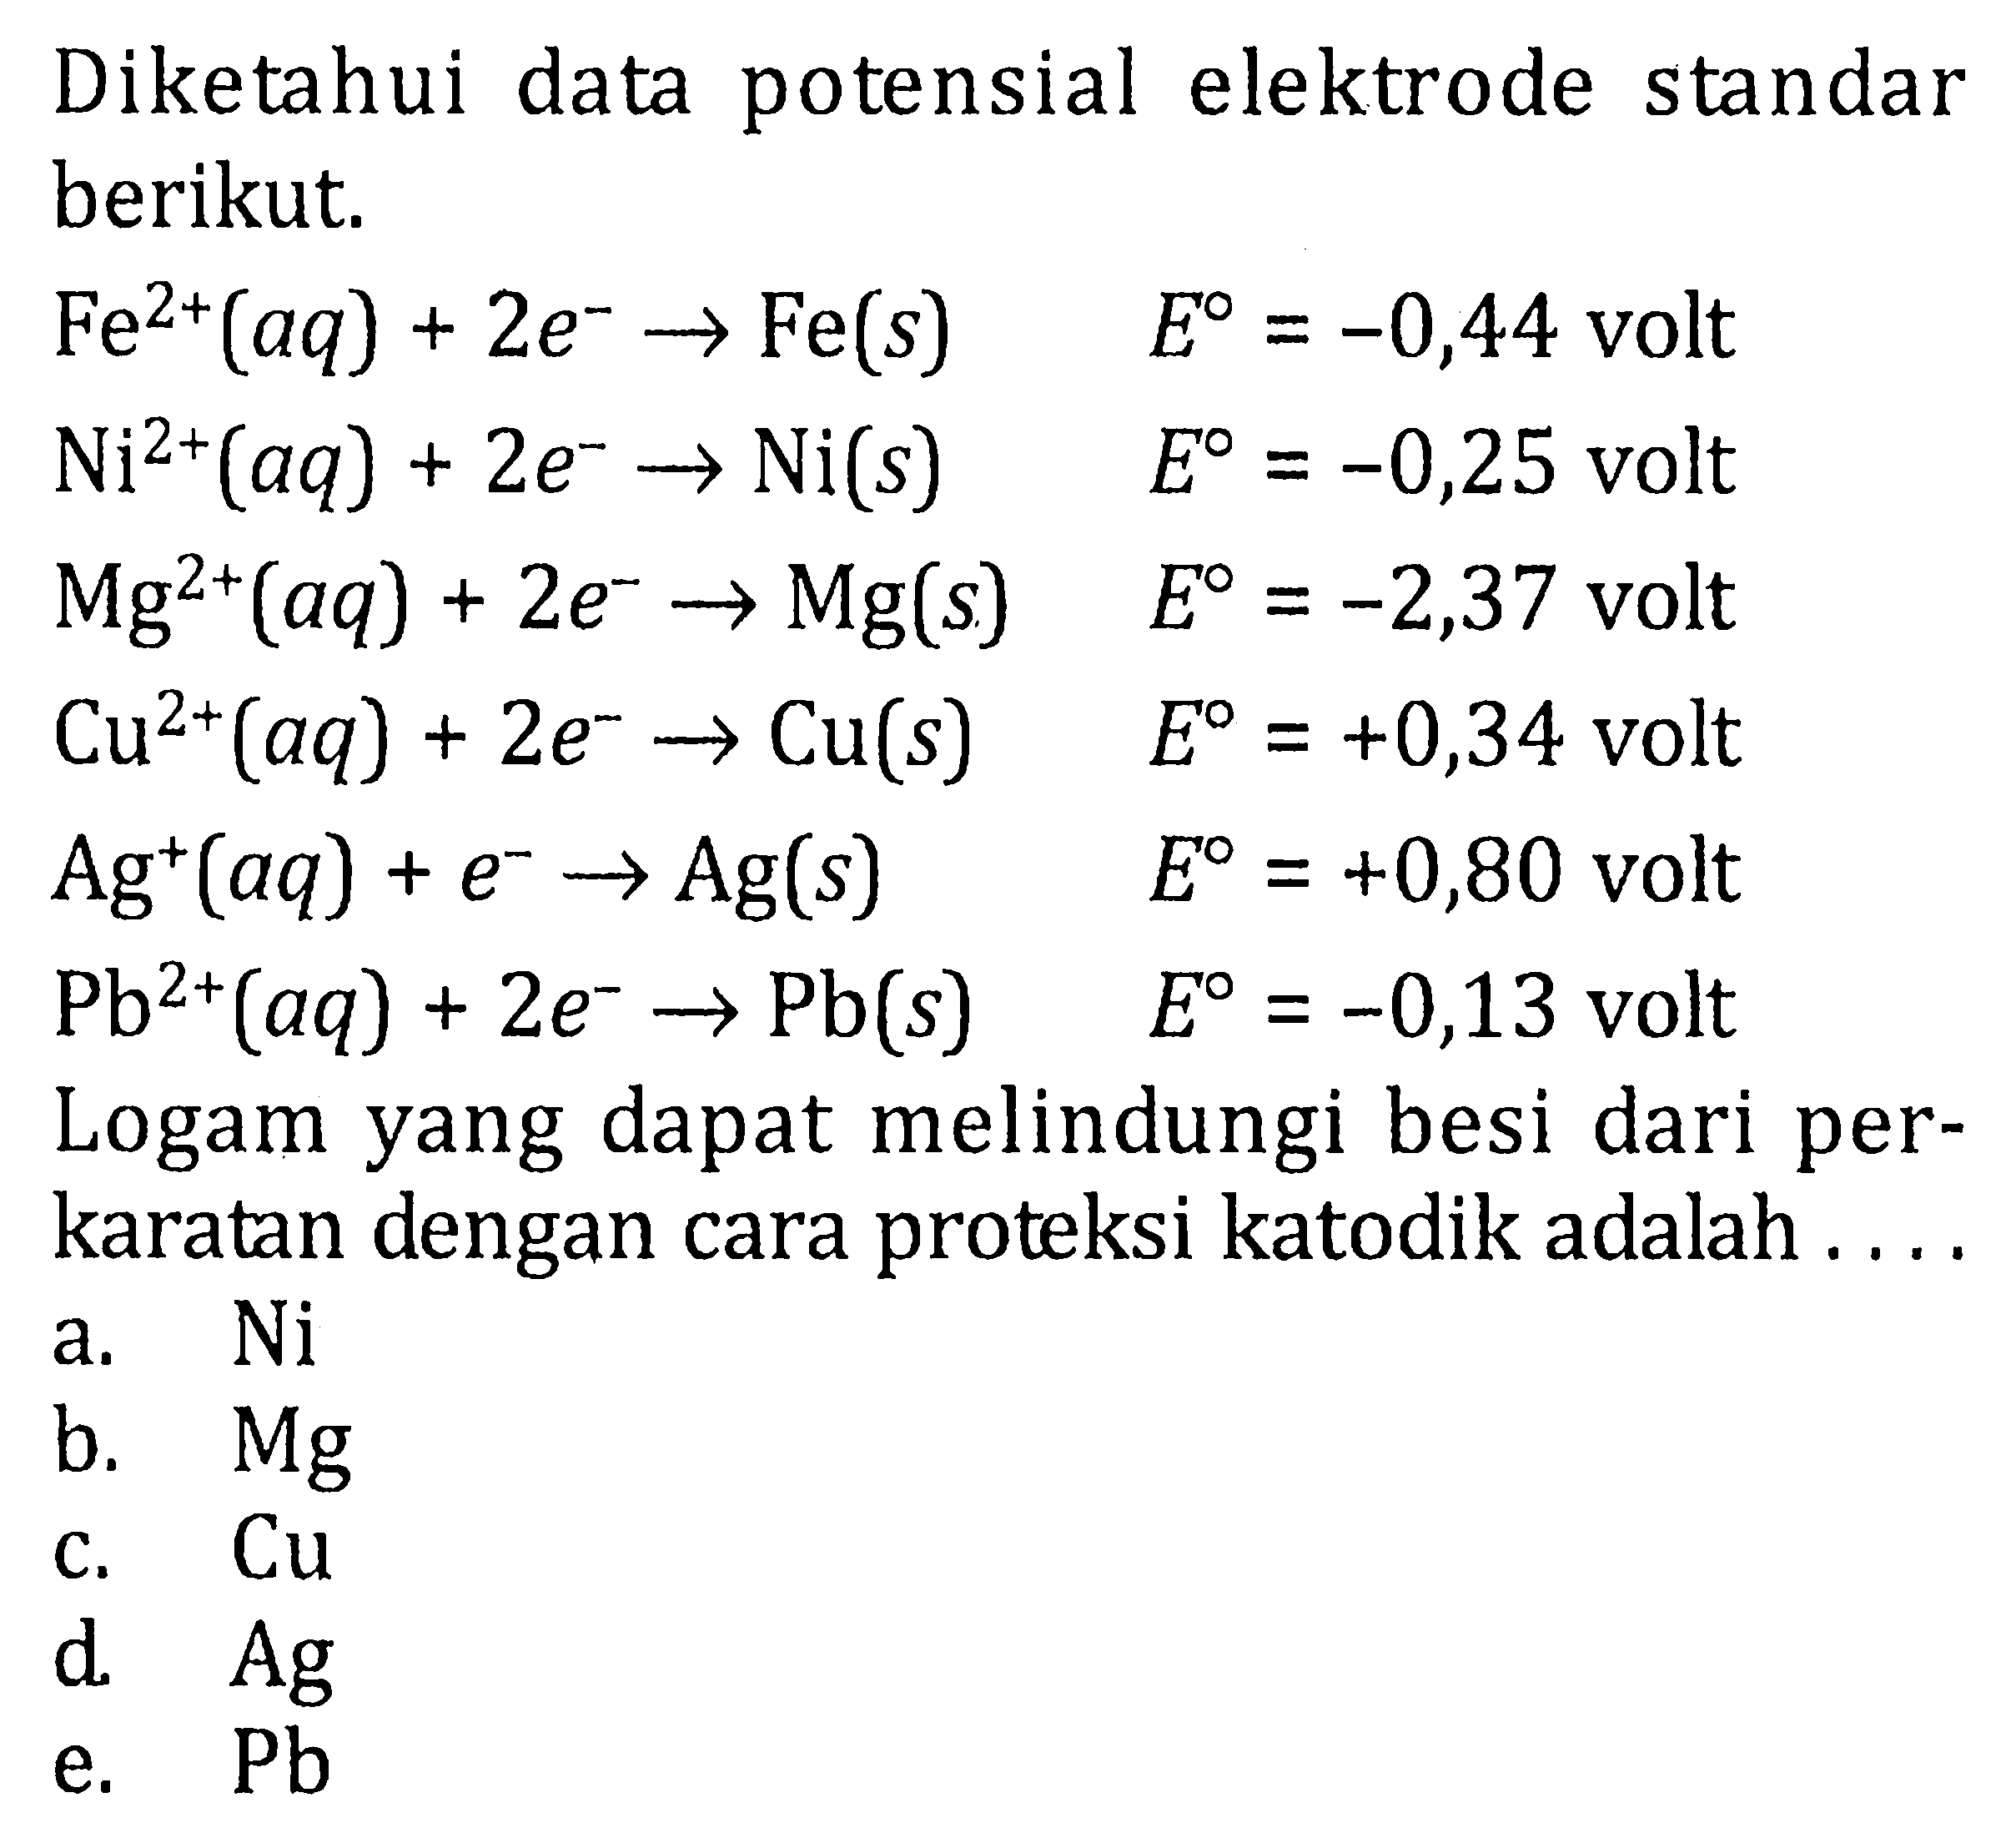 Diketahui data potensial elektrode standar berikut. Fe^(2+) (aq) + 2e^- -> Fe(s) E = -0,44 volt Ni^(2+) (aq) + 2e^- -> Ni(s) E = -0,25 volt Mg^(2+) (aq) + 2e^- -> Mg(s) E = -2,37 volt Cu^(2+) (aq) + 2e^- -> Cu(s) E = +0,34 volt Ag^+ (aq) + e^- -> Ag(s) E = +0,80 volt Pb^(2+) (aq) + 2e^- -> Pb(s) E = -0,13 volt Logam yang dapat melindungi besi dari per- karatan dengan cara proteksi katodik adalah ....